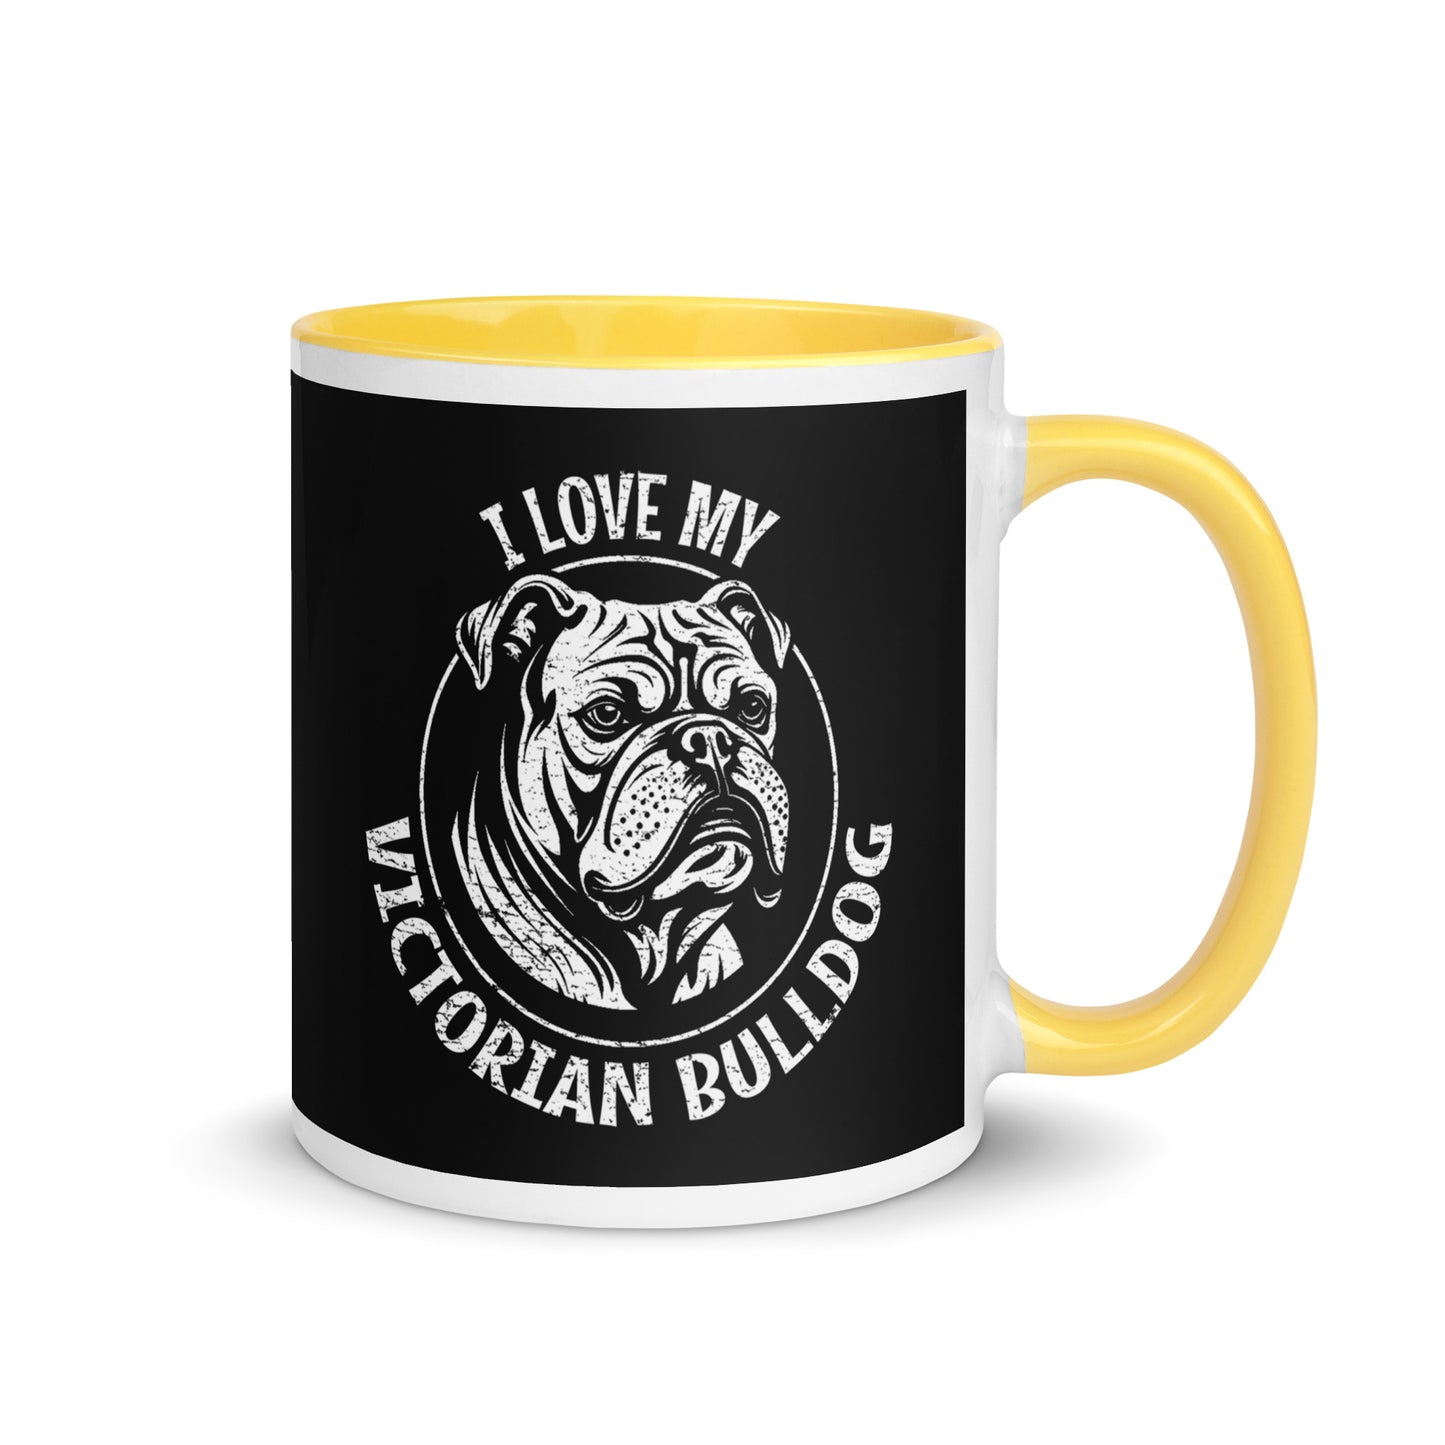 Victorian Bulldog Mug, Victorian Bulldog gift, gift for dog mom, custom dog gift, dog owner gift, pet memorial gift